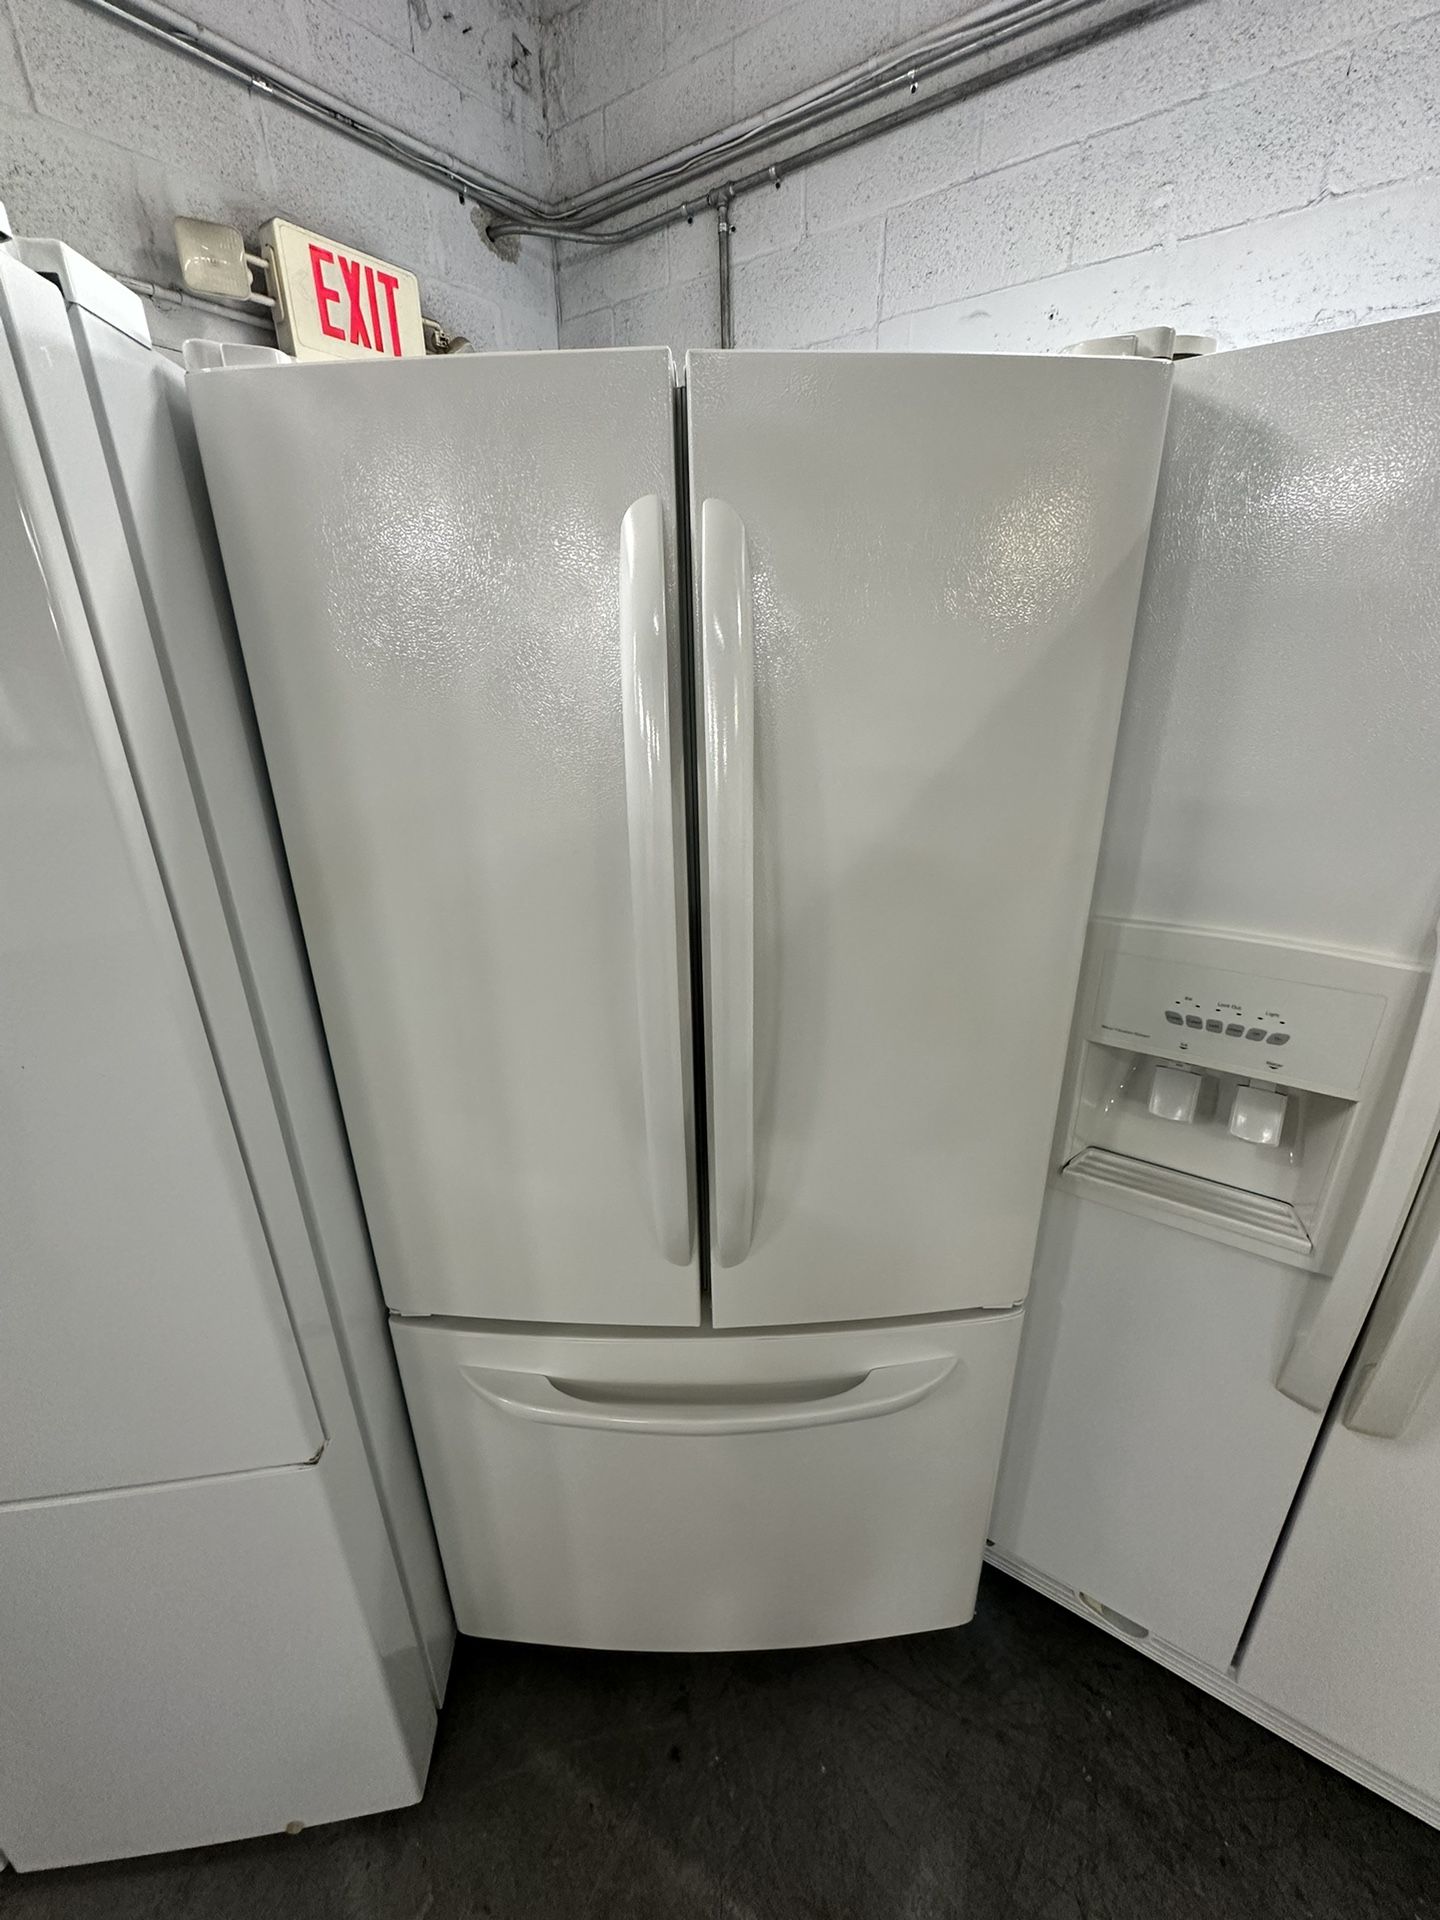 Kenmore Refrigerator “33